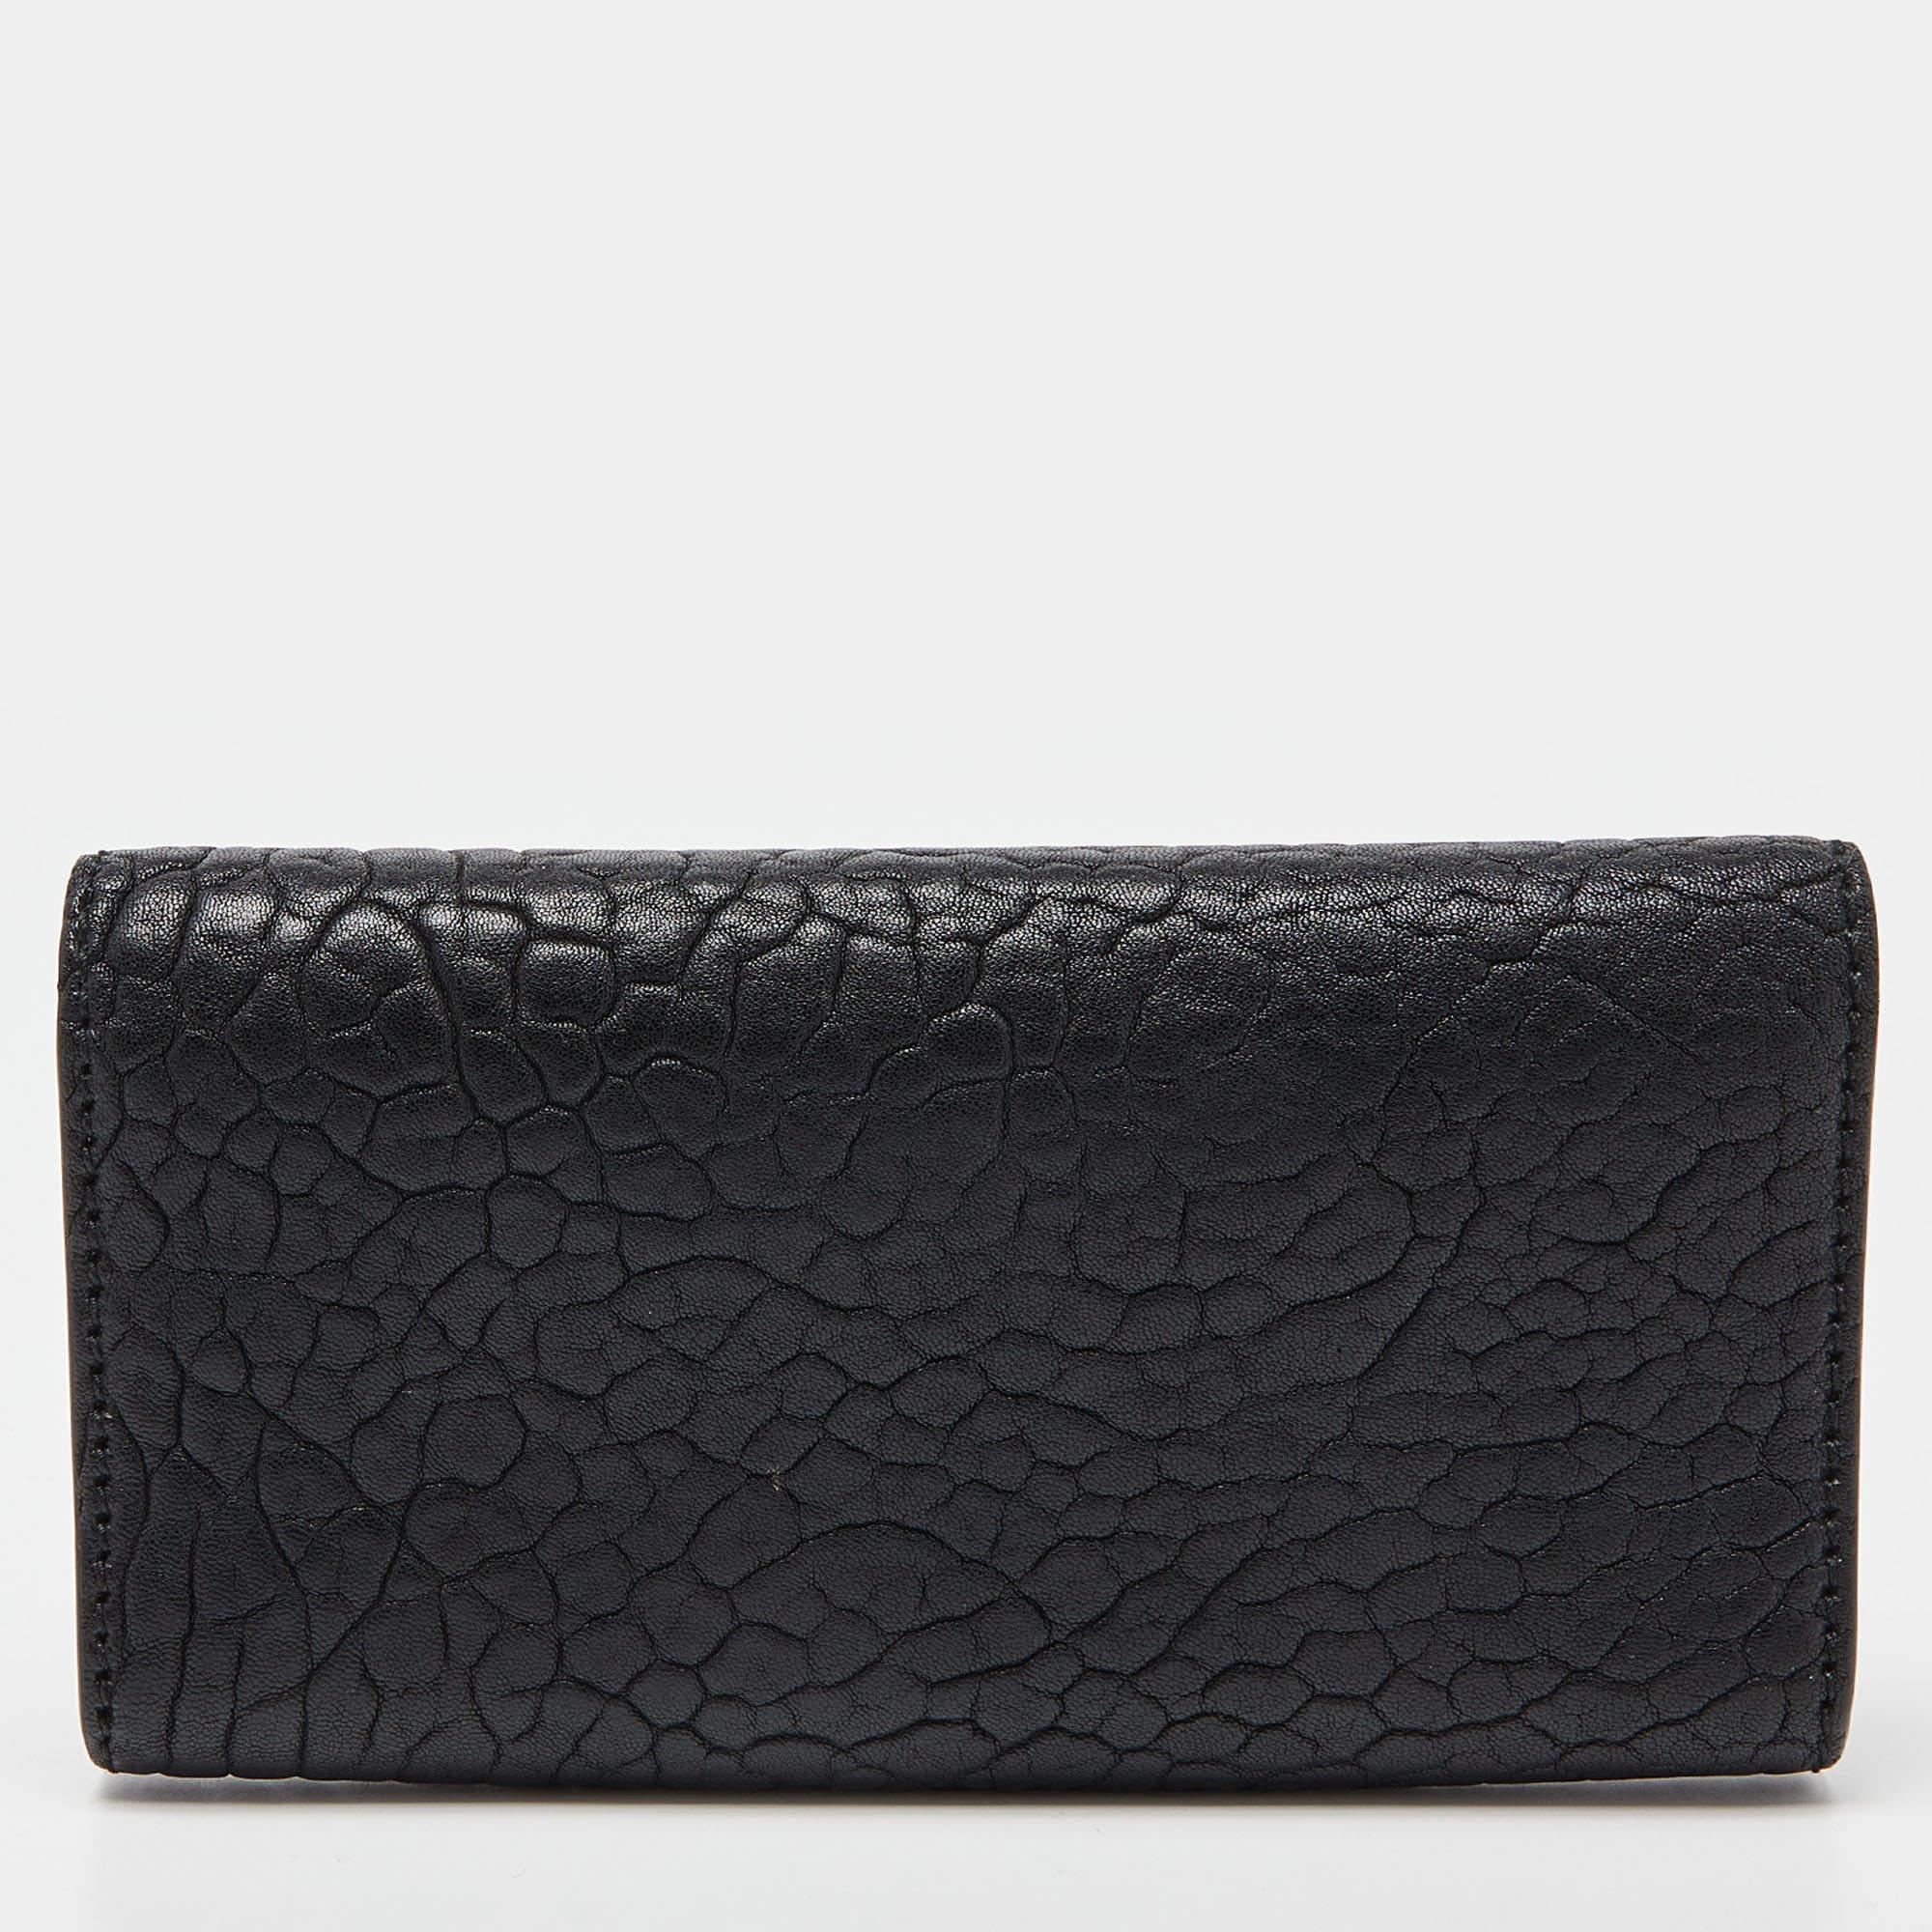 Dior Black Leather J'Adior Croisiere Wallet on Chain 1